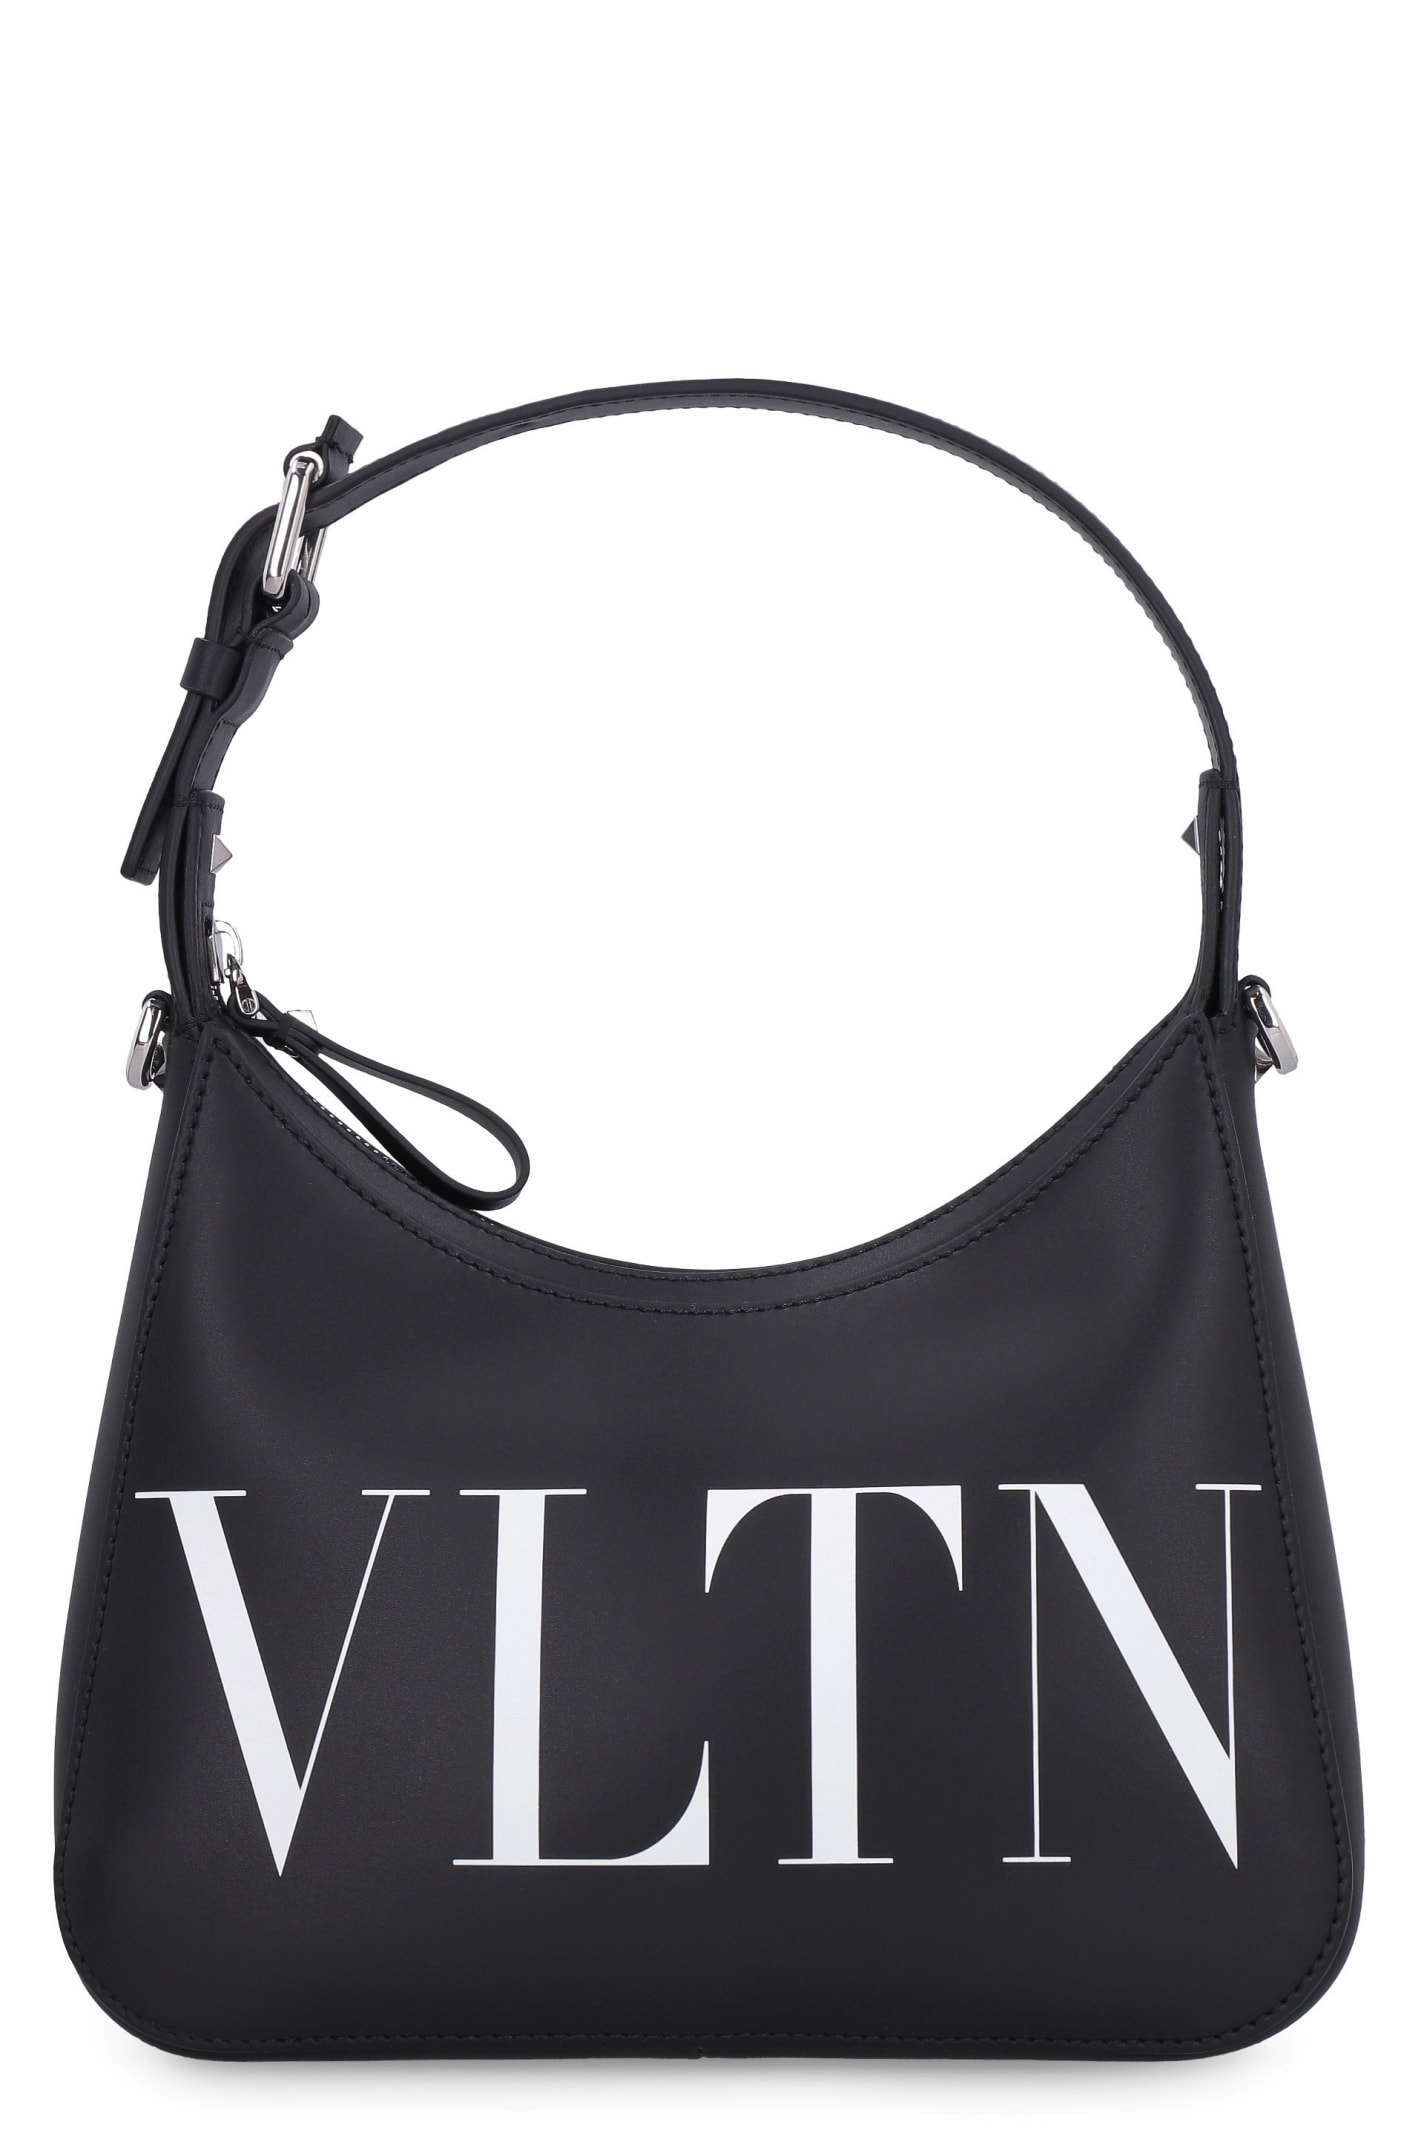 Valentino Garavani - Vltn Leather Hobo Bag